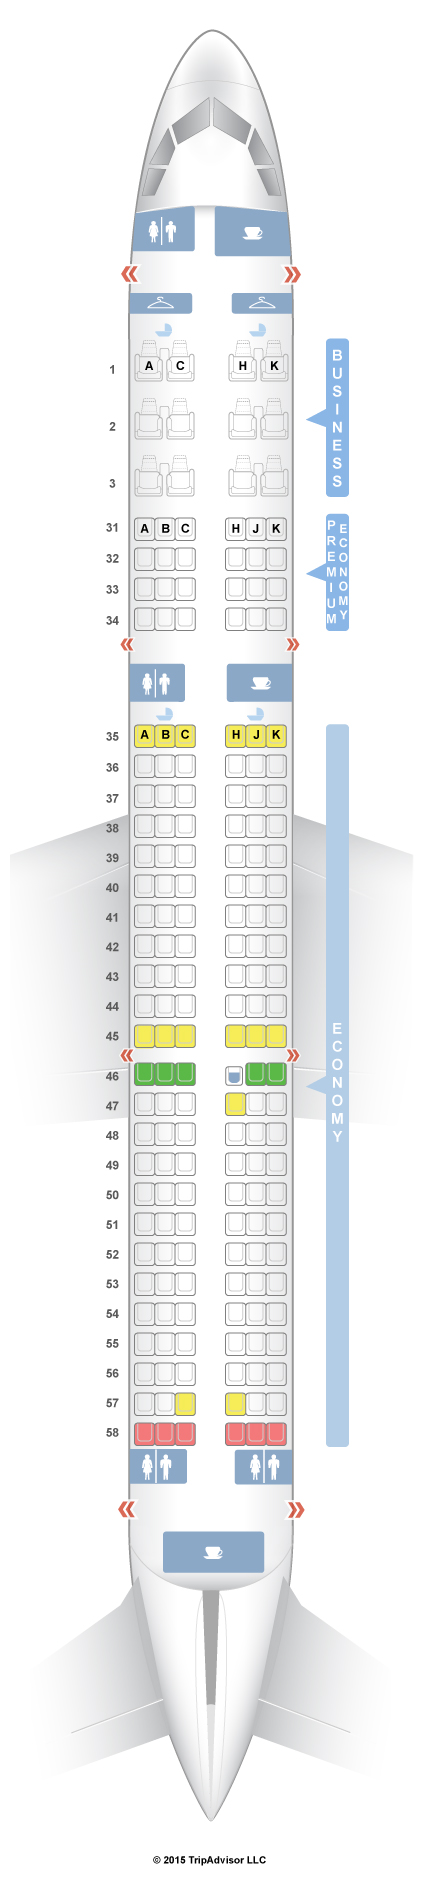 321 Seating Chart